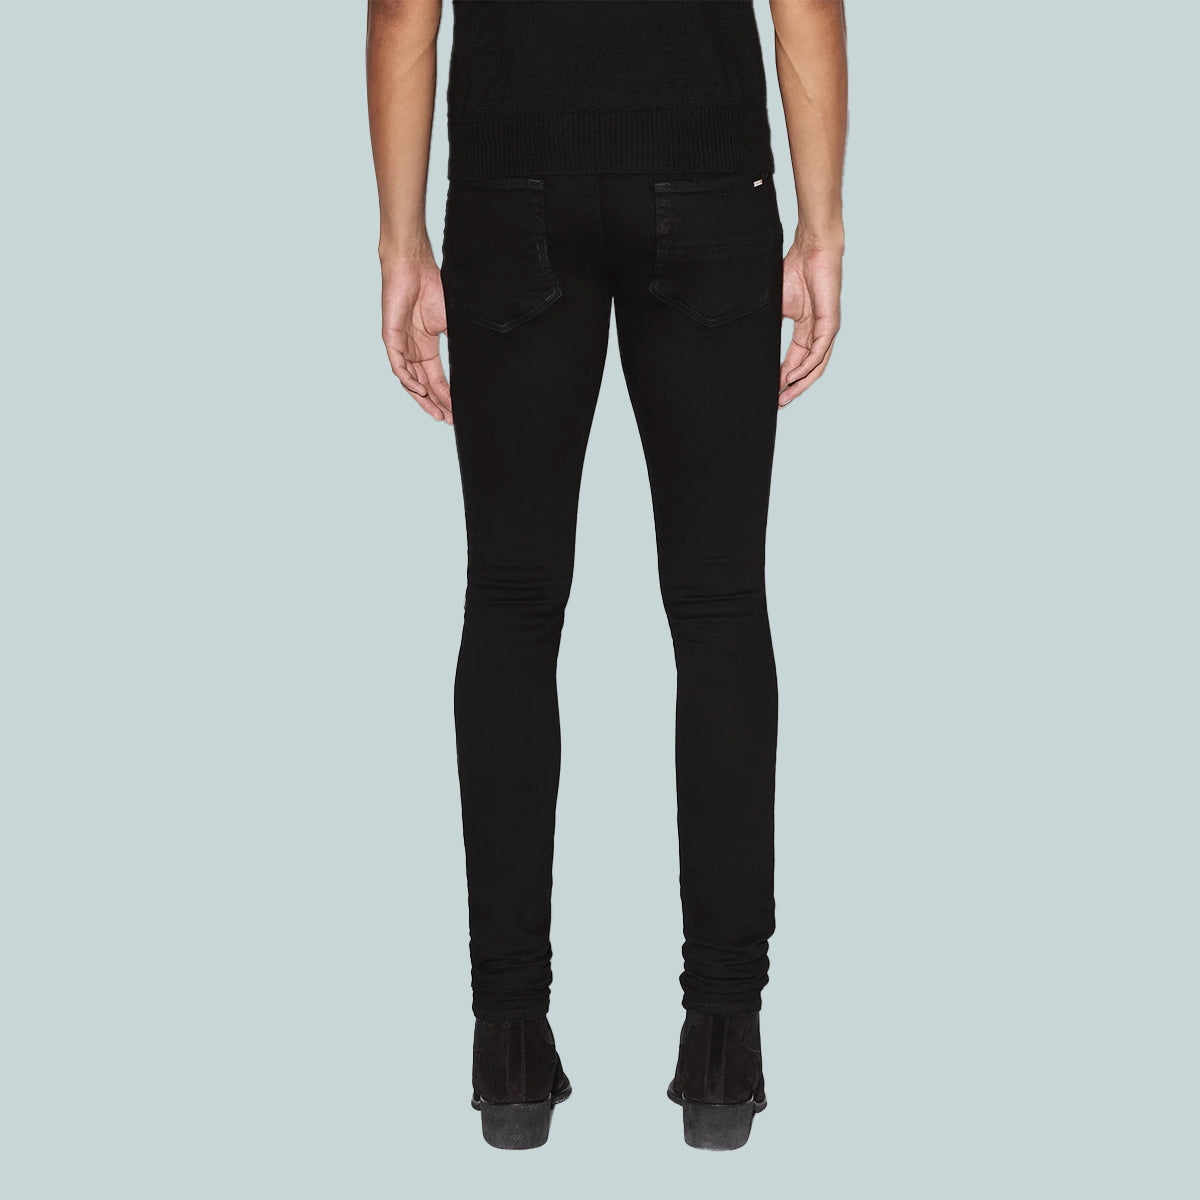 MX1 Jeans Black Leather